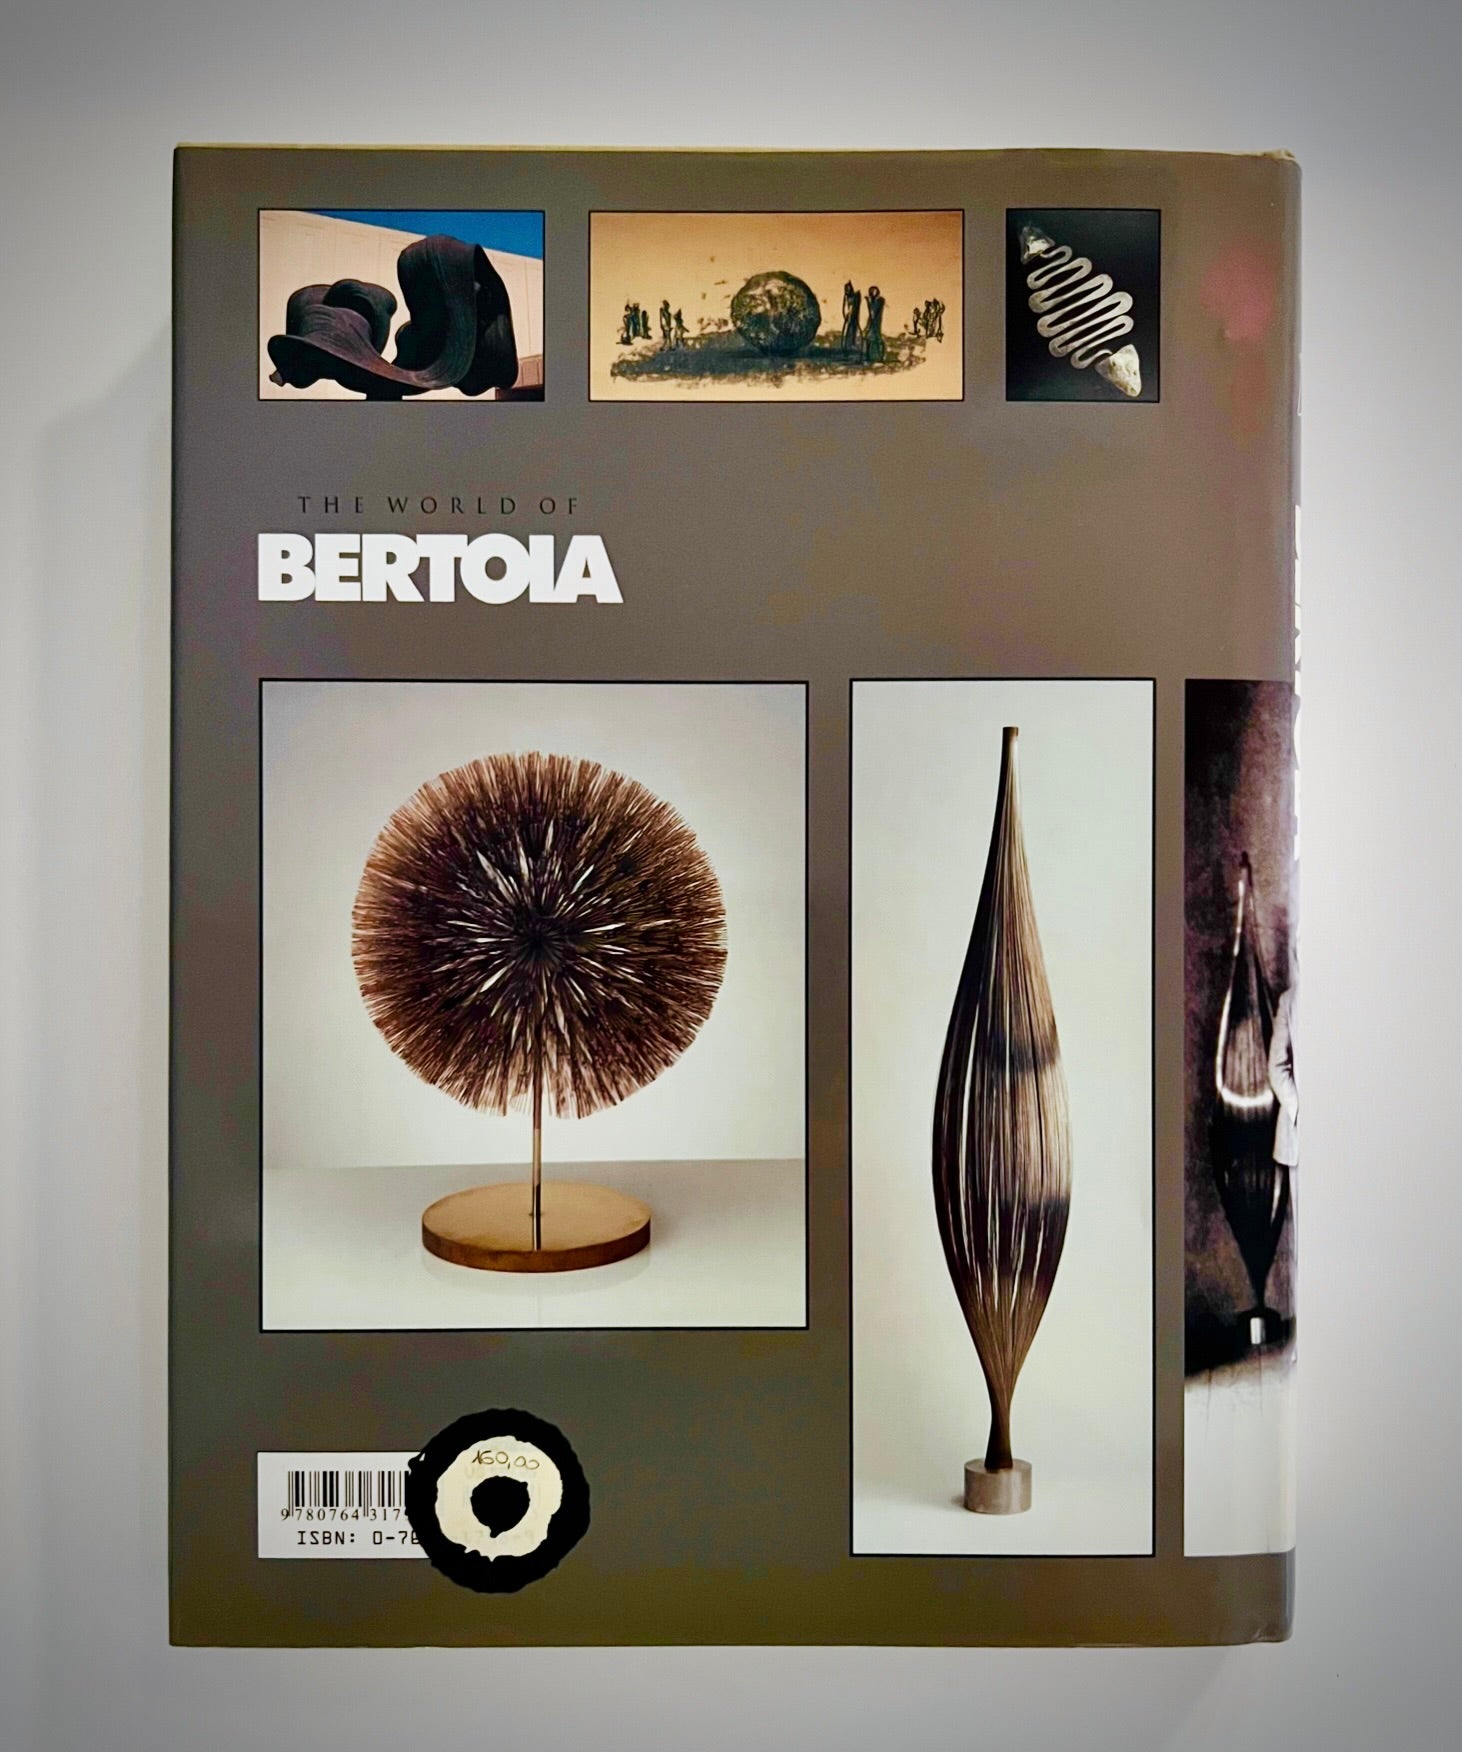 SCHIFFER, Nancy N. and Val. O Bertoia. The World of Bertoia.